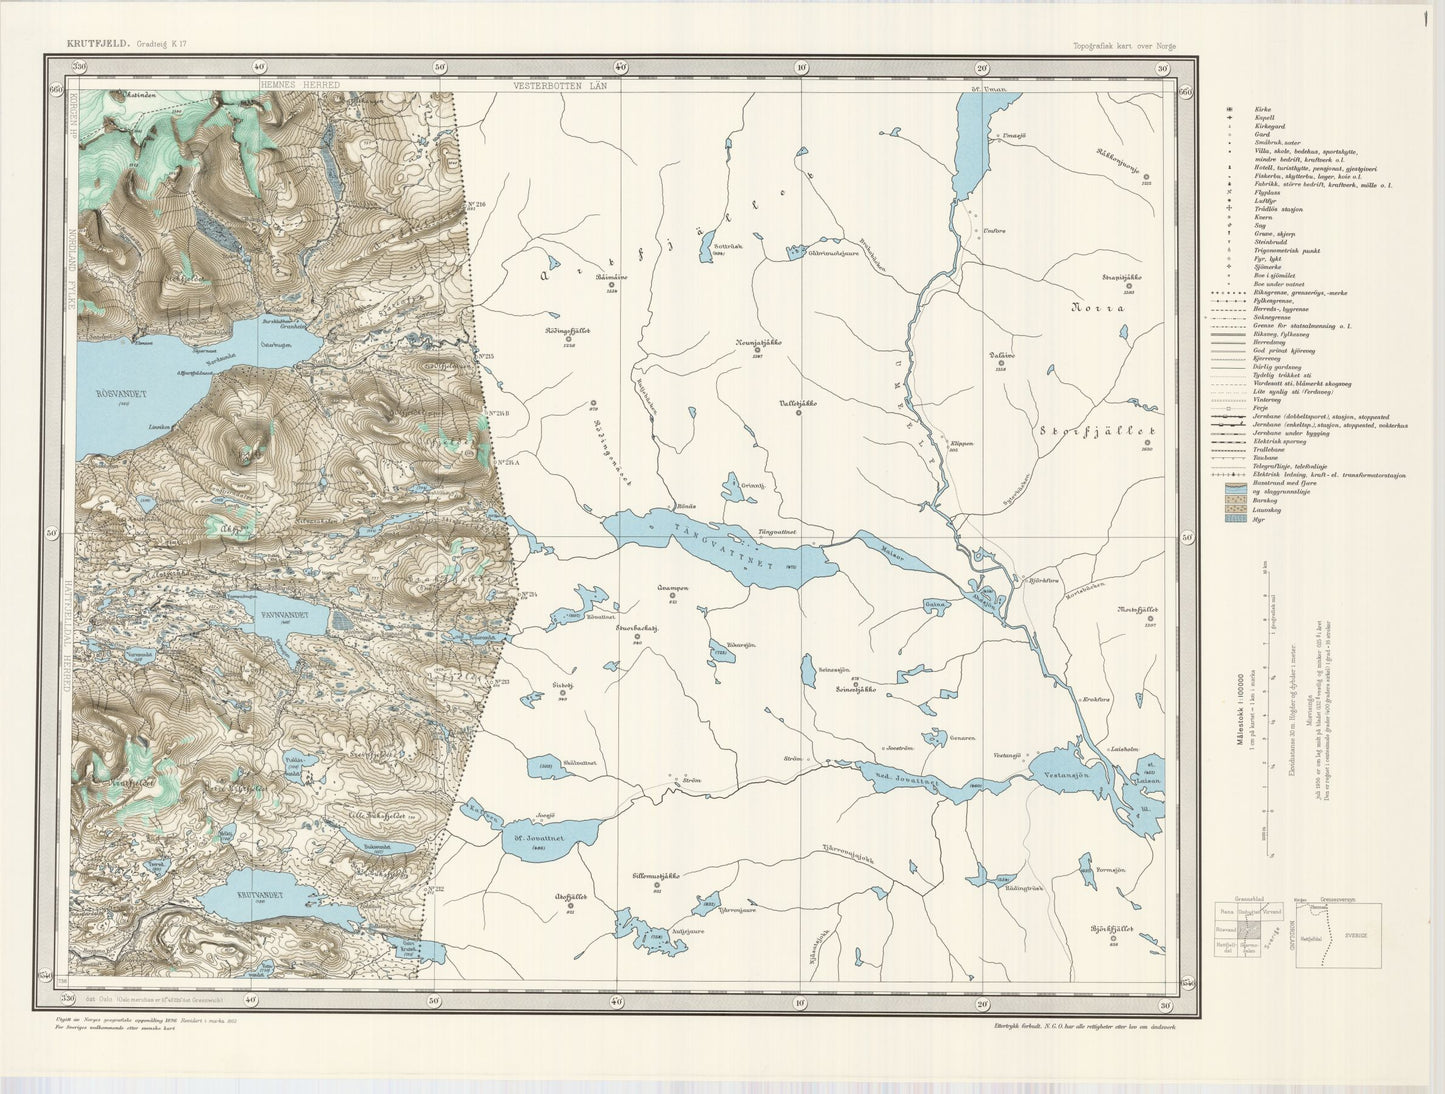 K17 Krutfjeld: Nordland